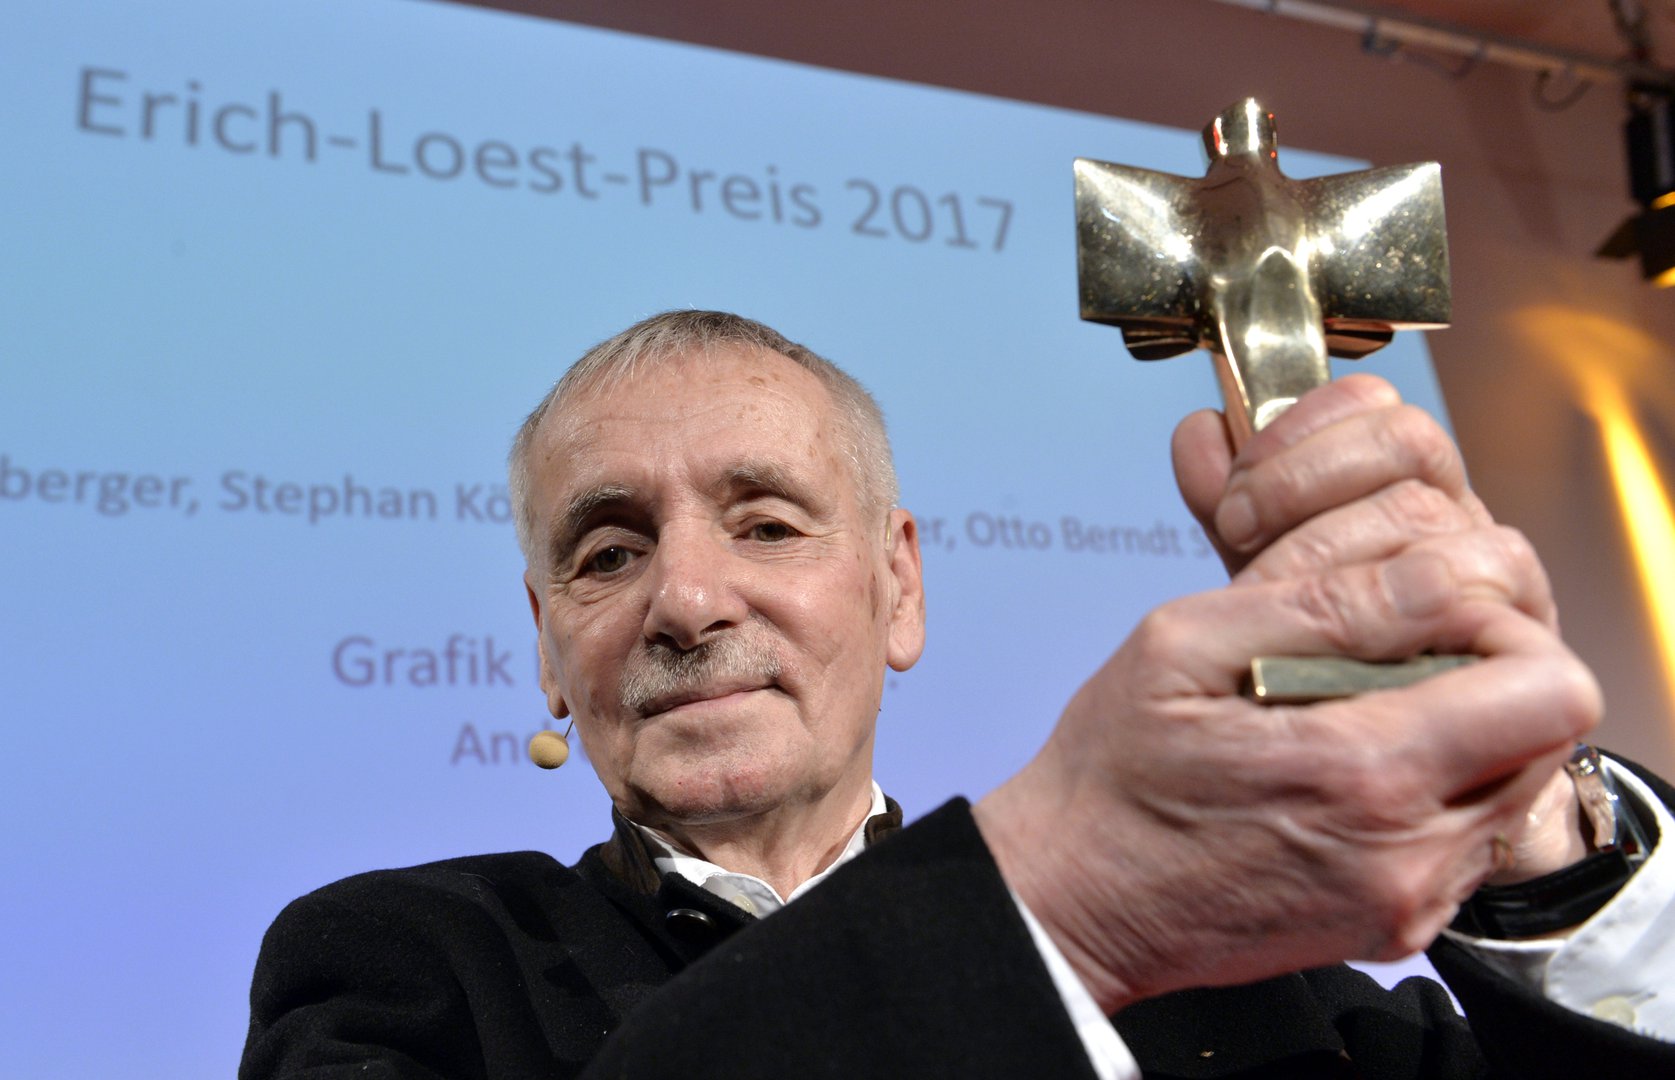 Guntram Vesper with the Erich-Loest-Award